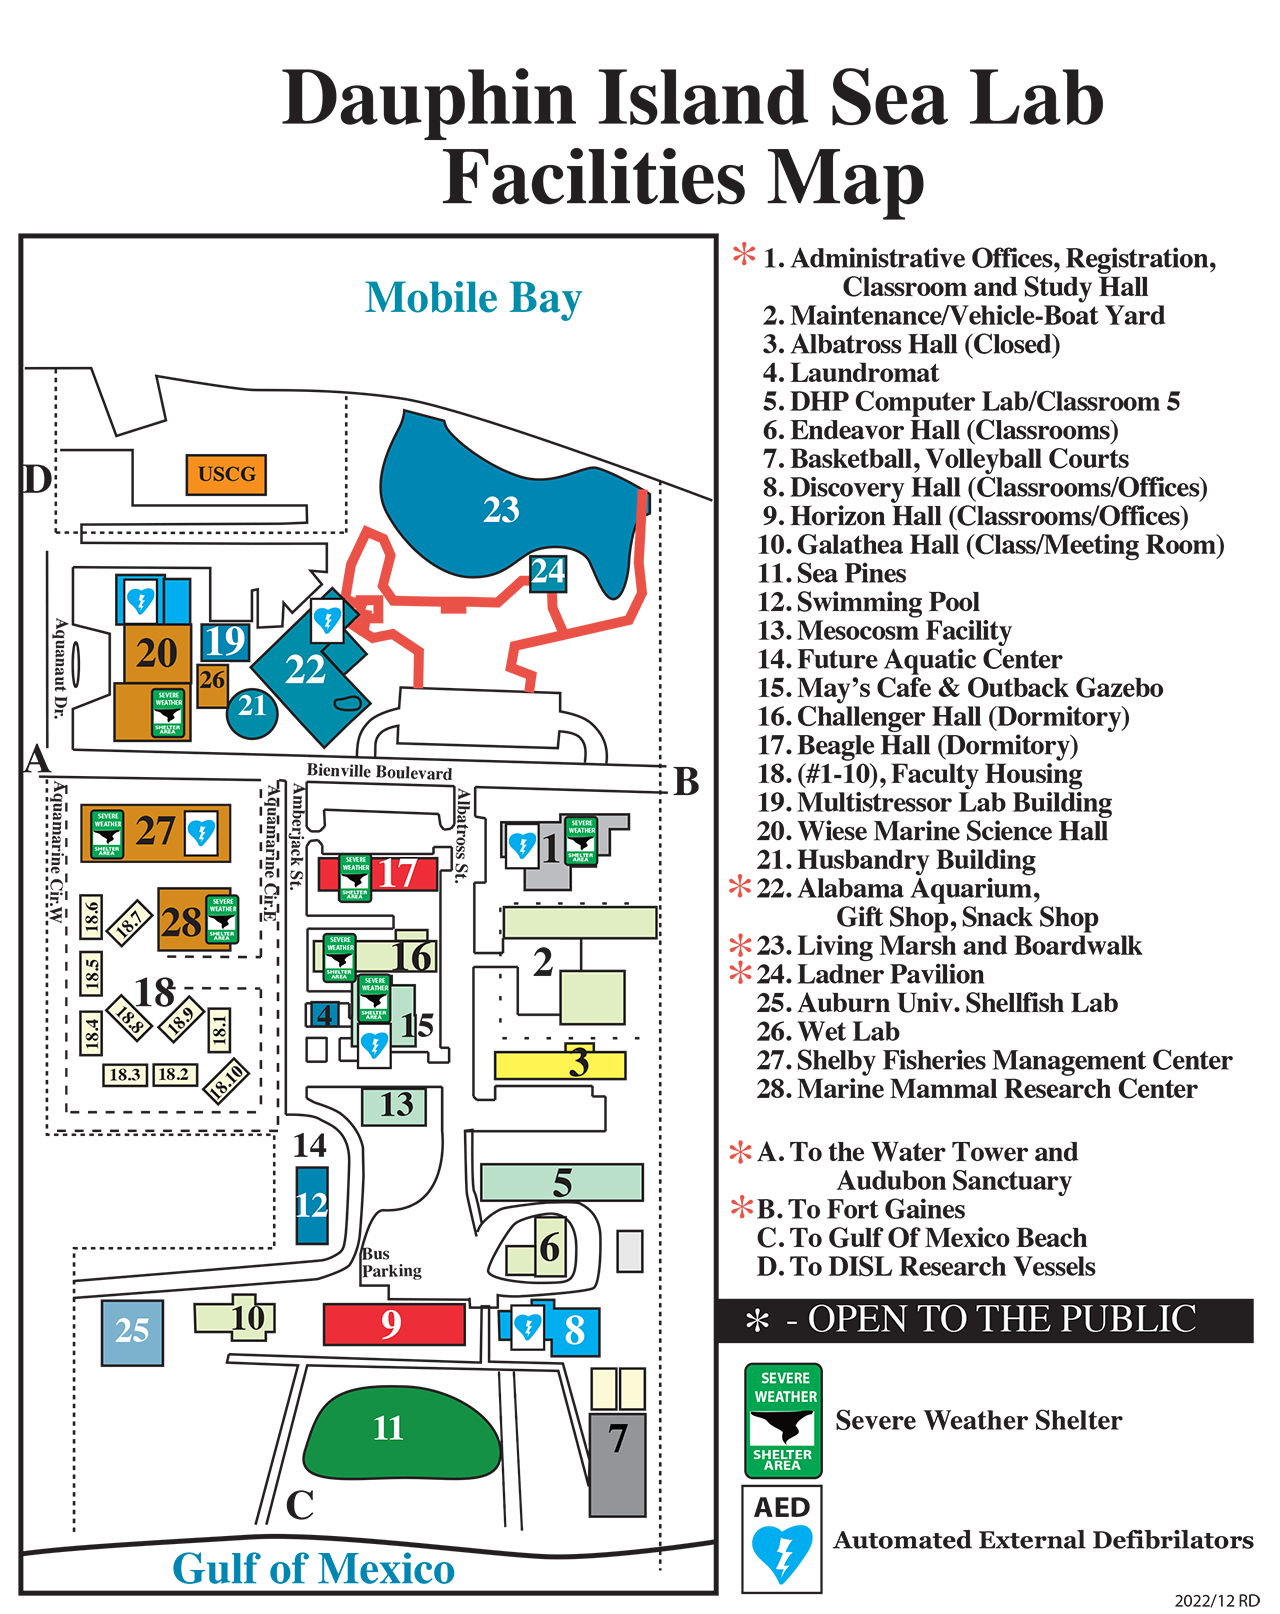 Dauphin Island Sea Lab Facilities Map